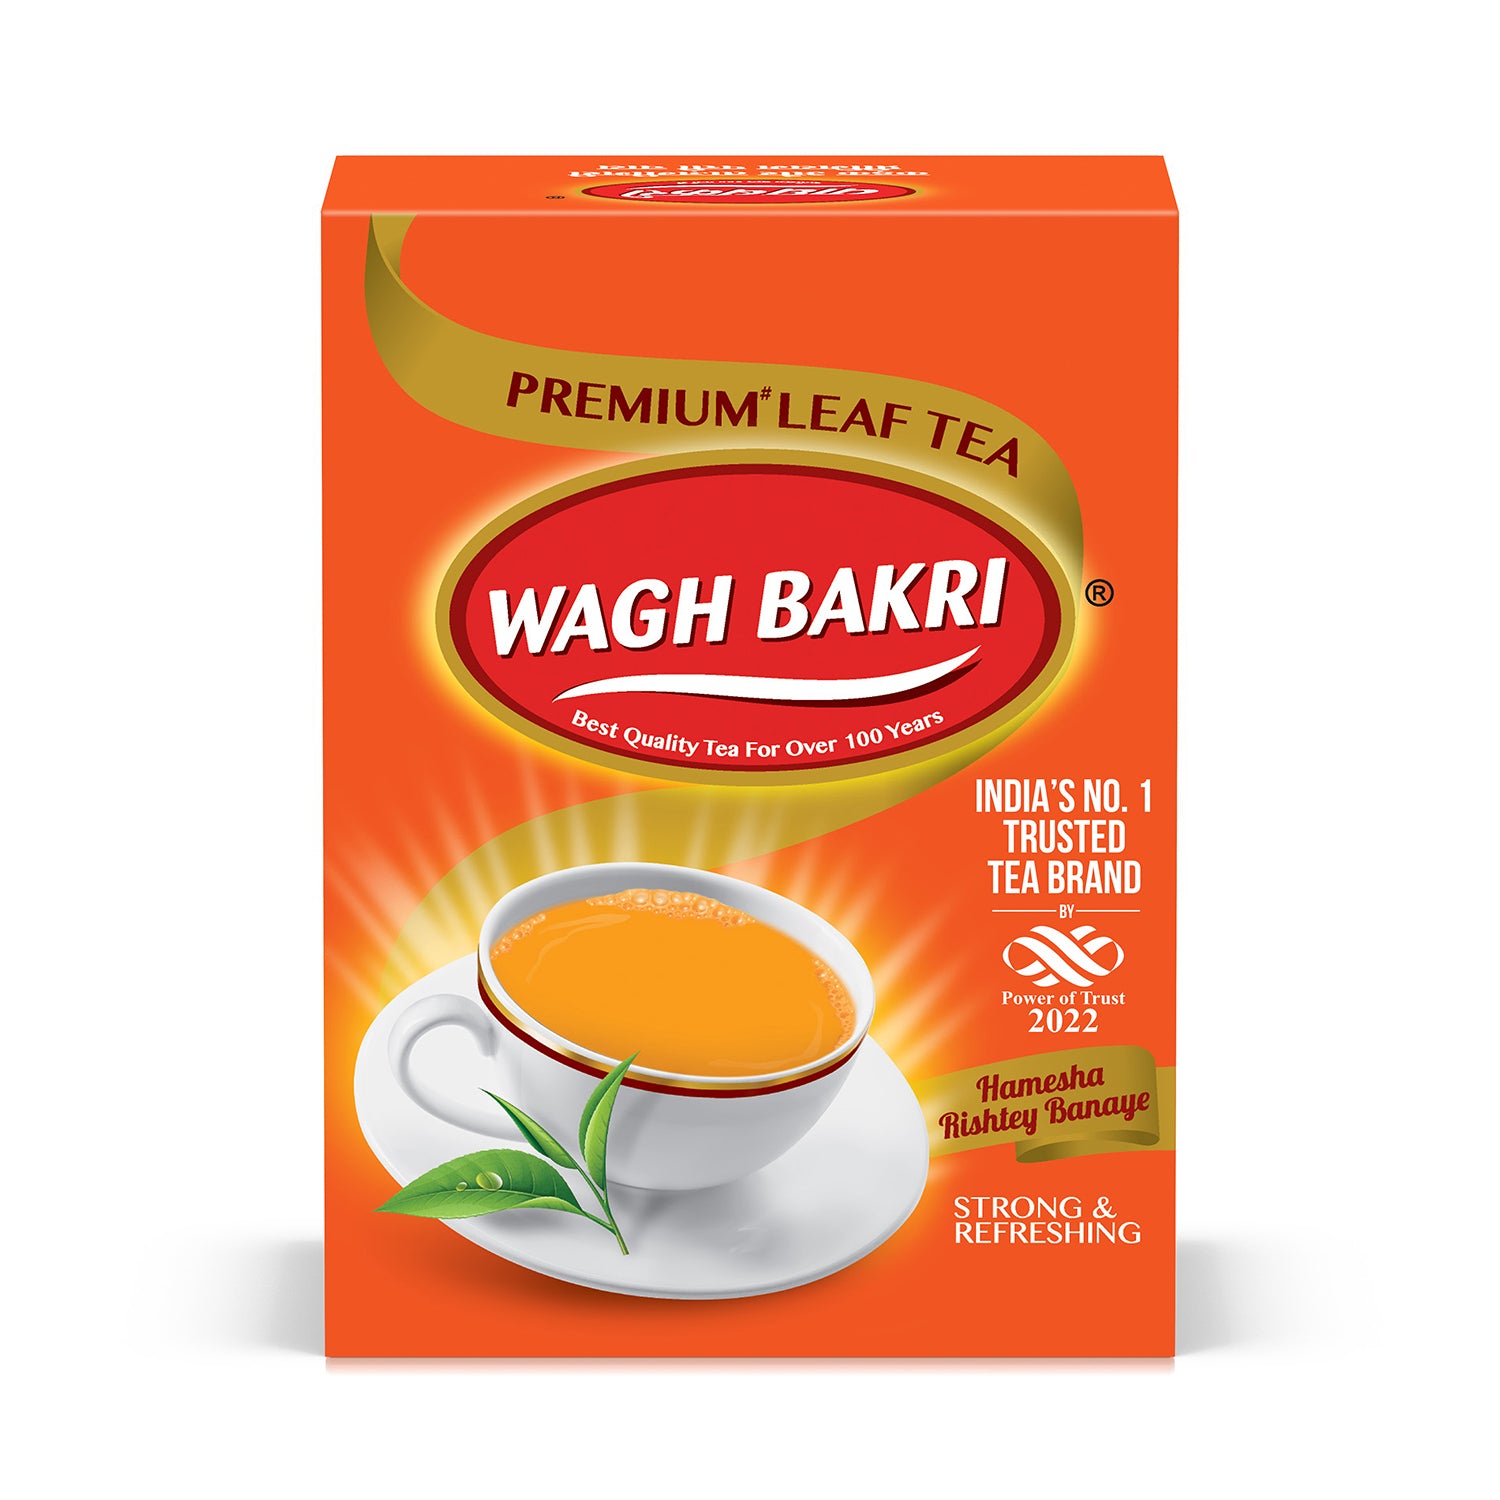 Wagh Bakri Premium Leaf Pack of 2 & Wagh Bakri Spiced Tea Combo